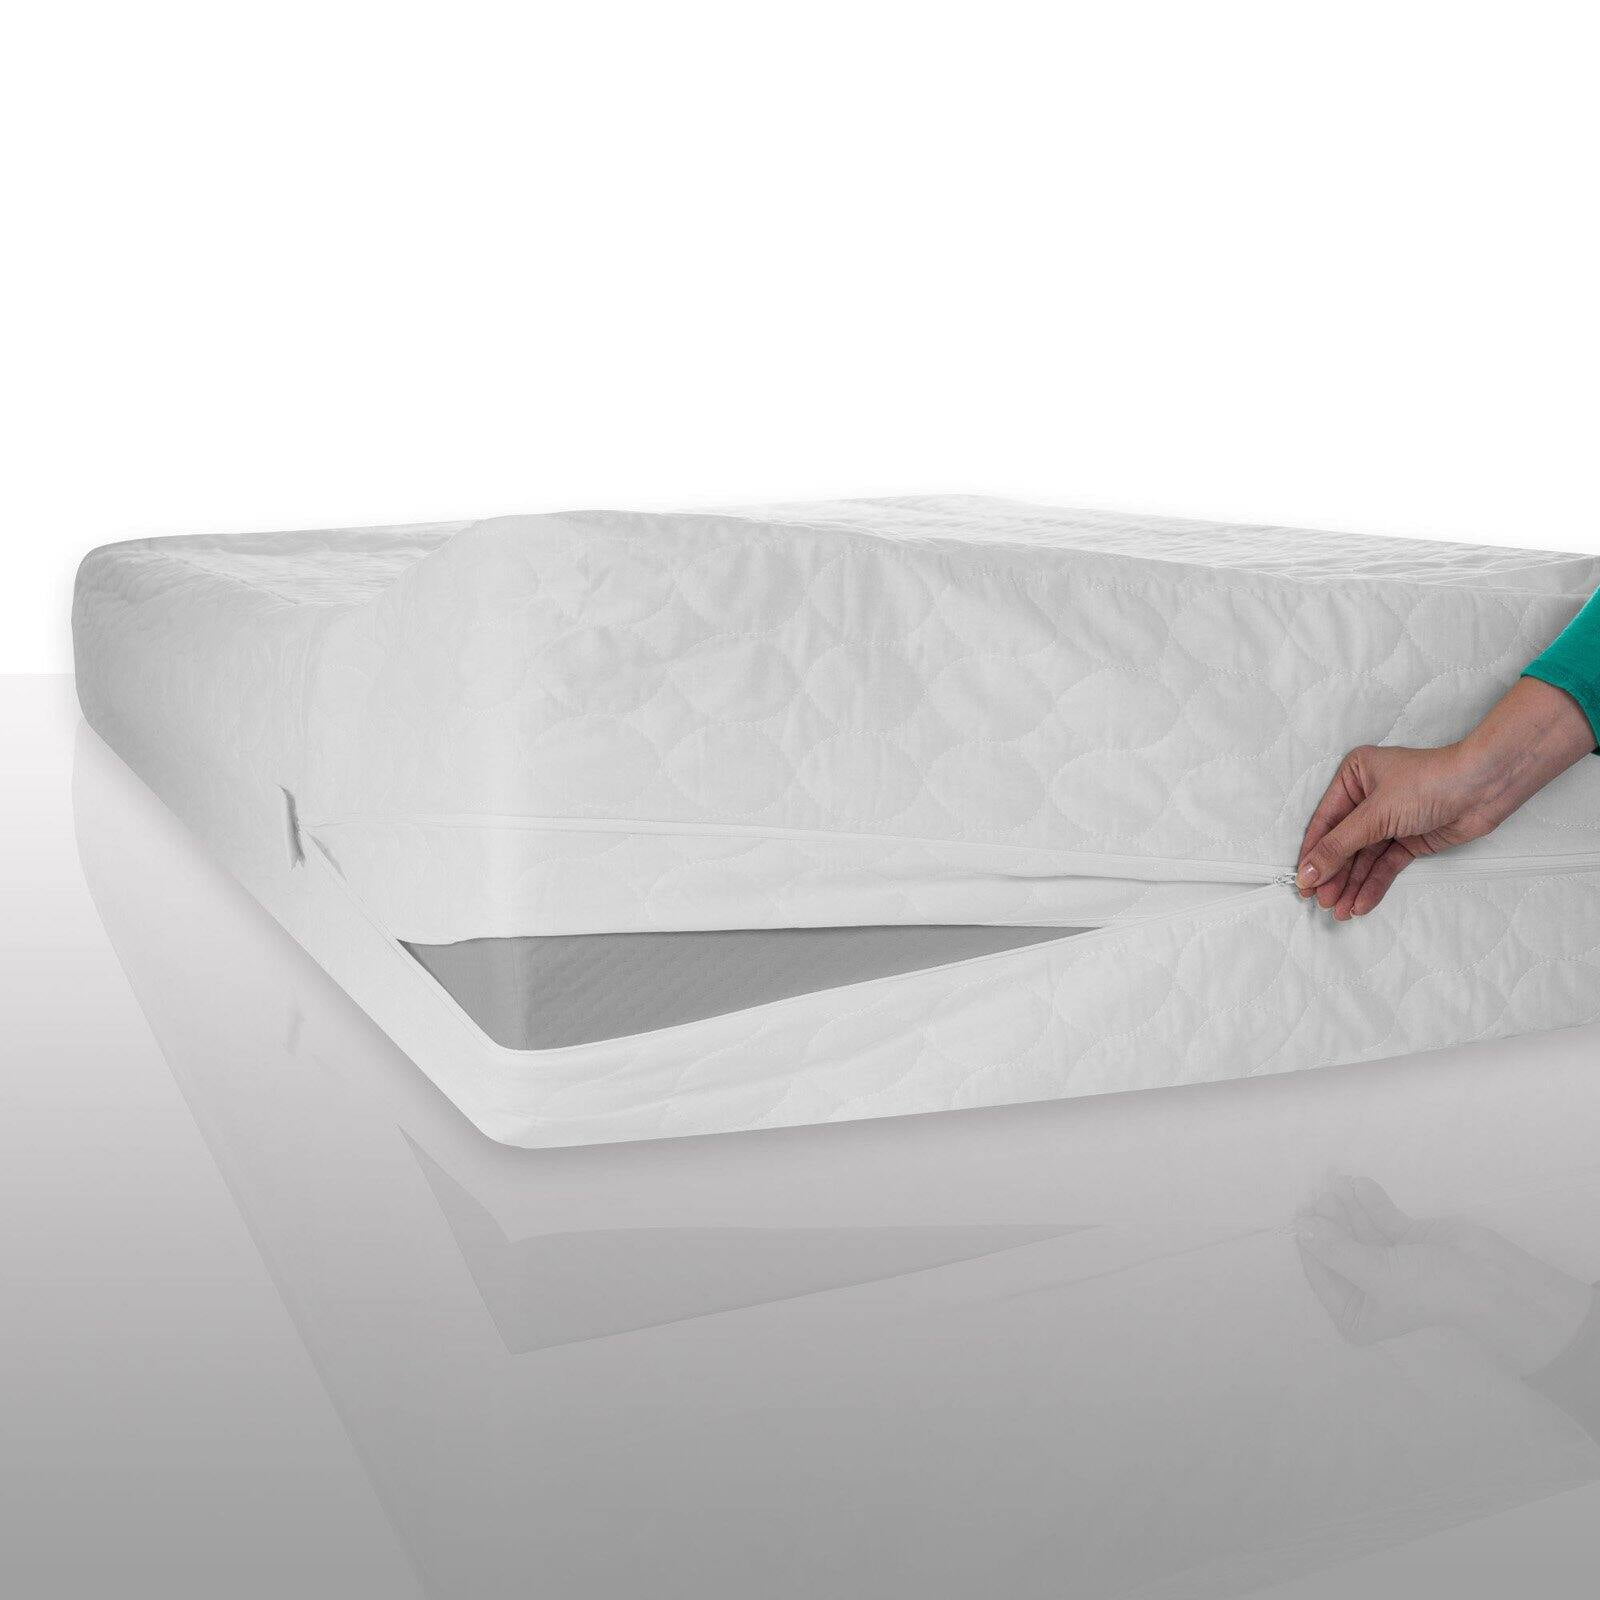 Mattress encasement Protector zippered Waterproof bed bugs dust mites bedding 